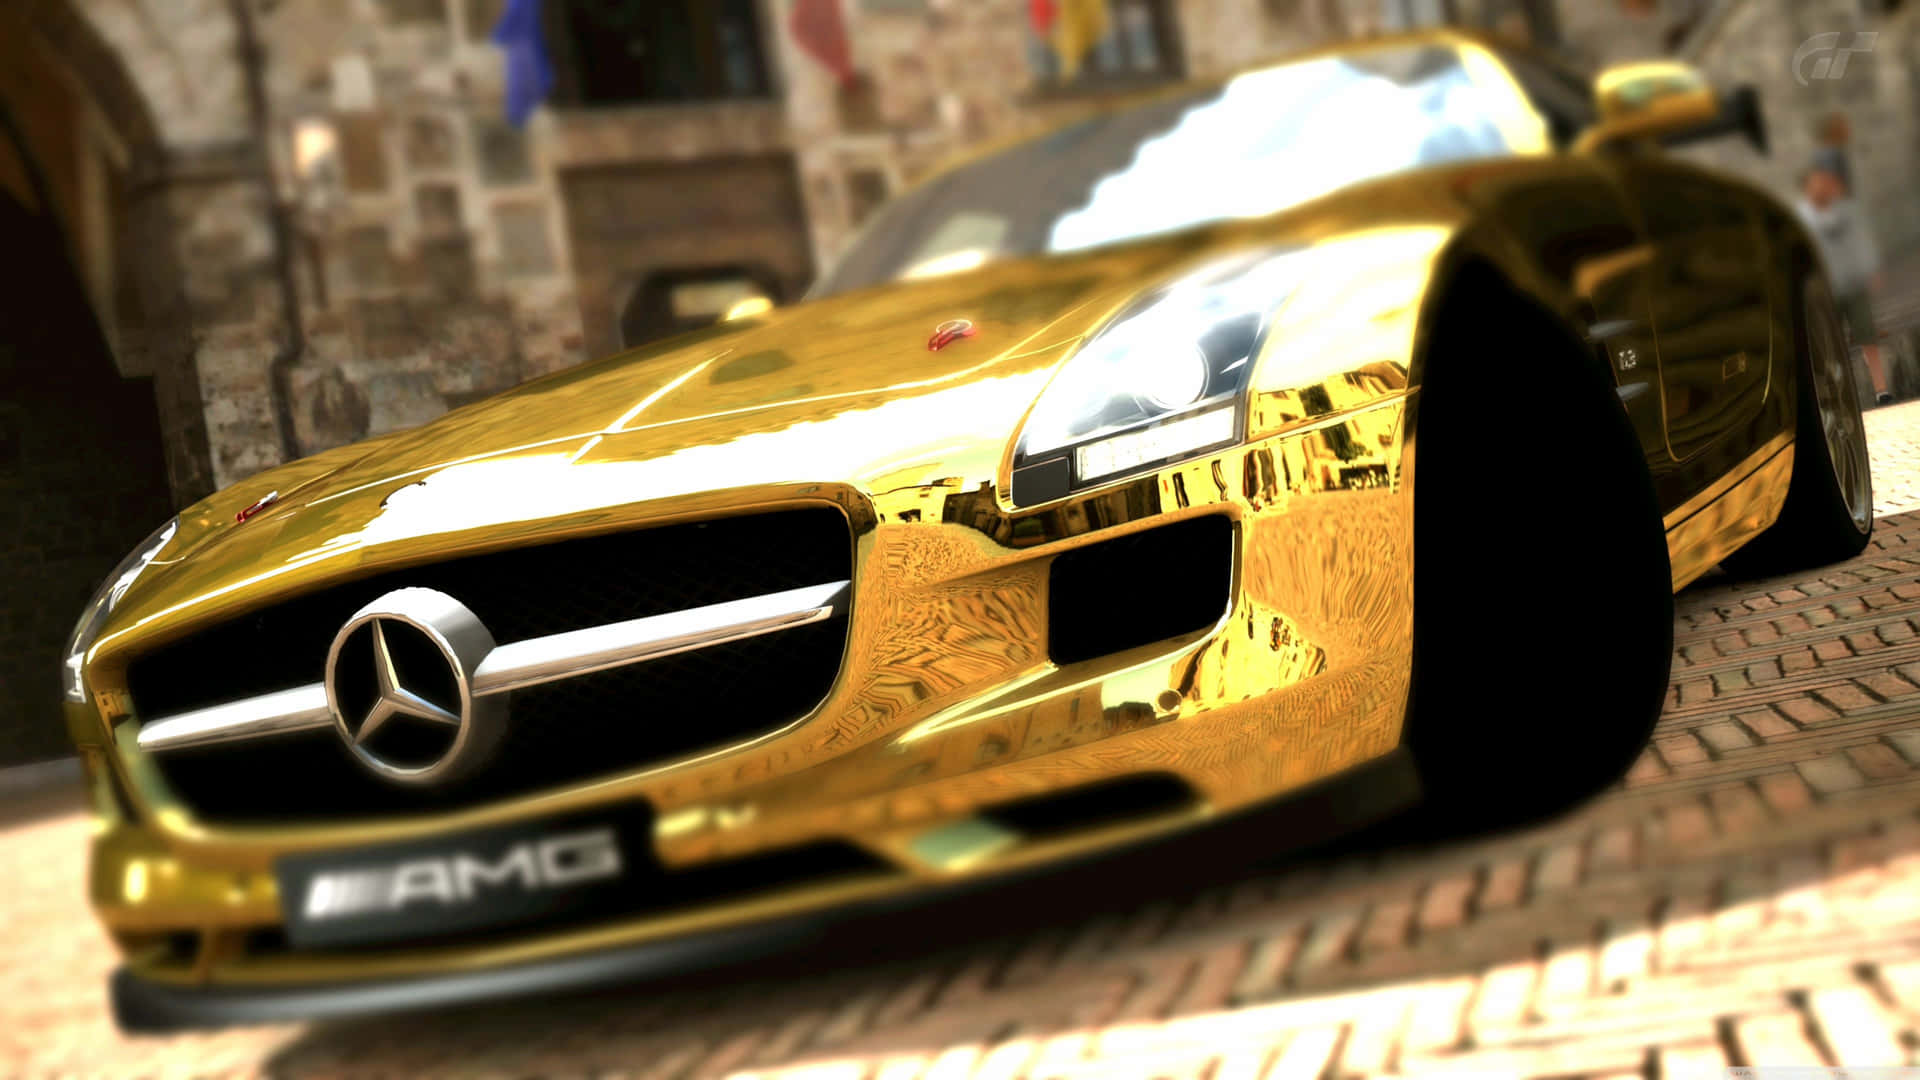 Caption: Luxurious Gold Mercedes Benz Sls Amg Sports Car